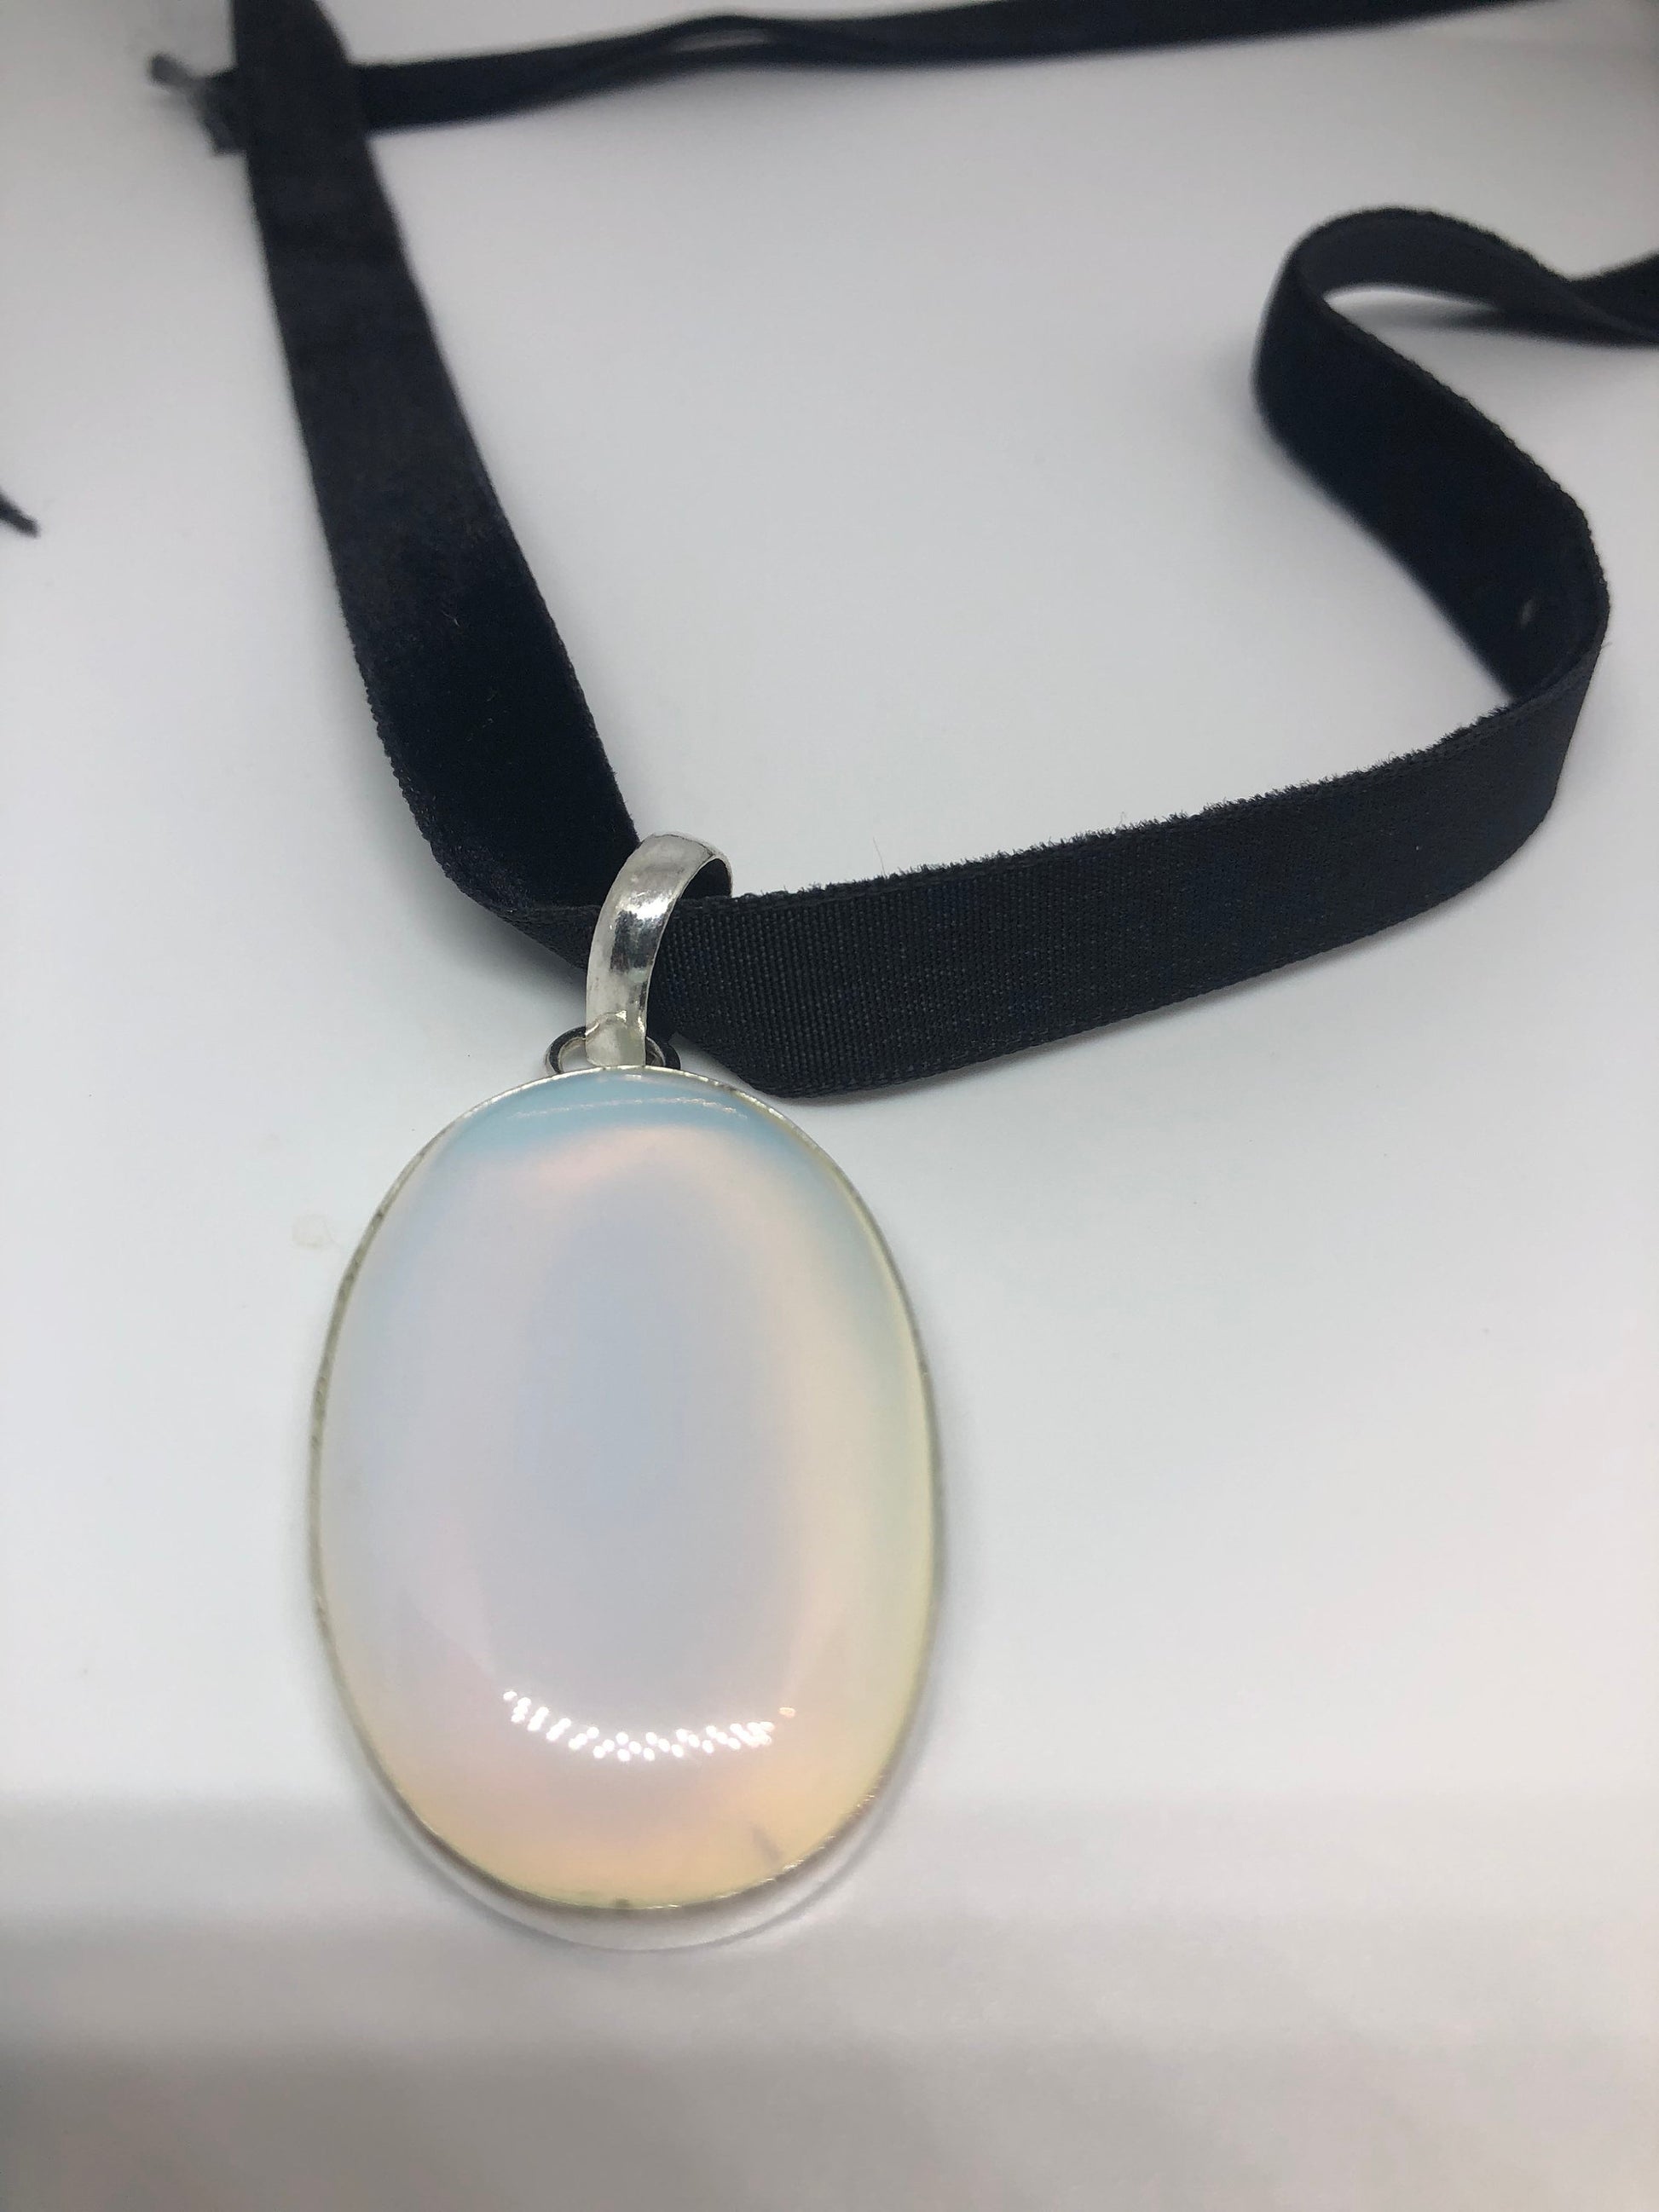 Vintage Opal milk glsss Silver collar Necklace Choker